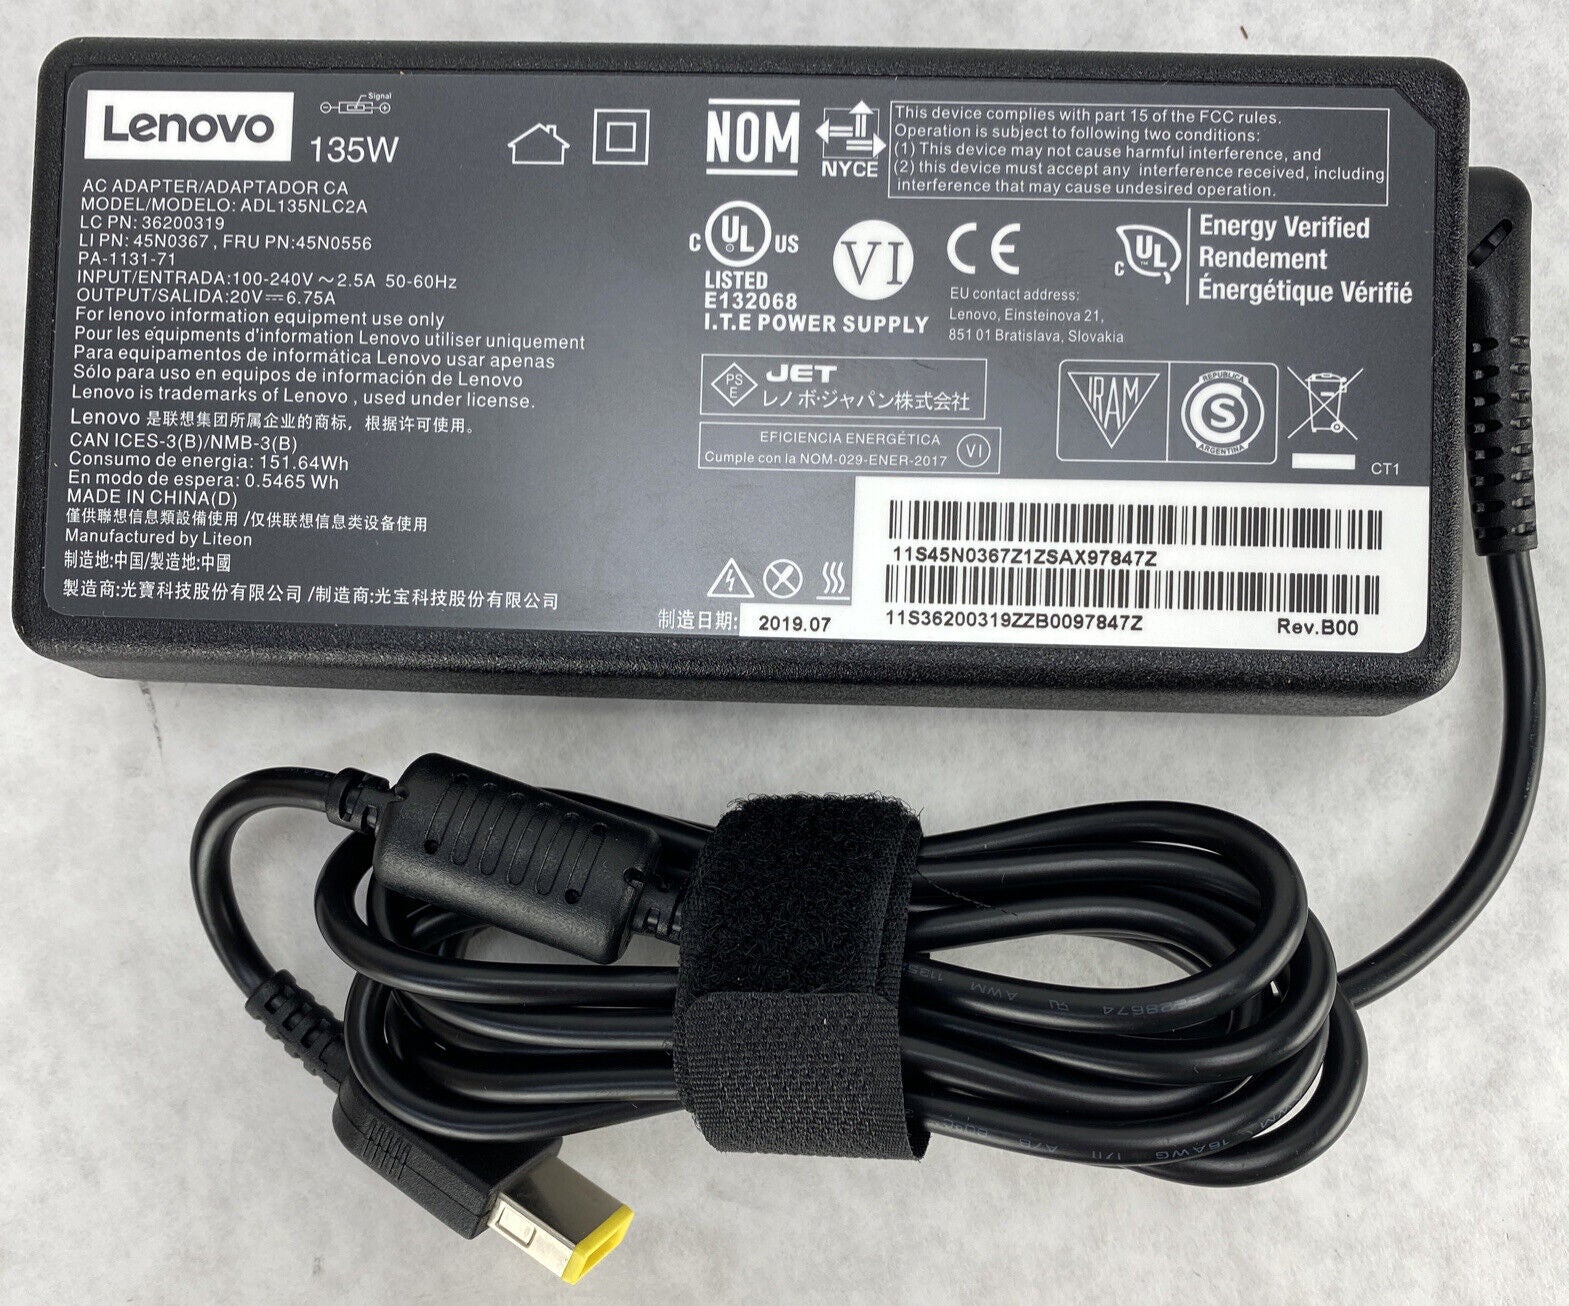 Lenovo 40AJ0135US ThinkPad 135w Ultra Docking Station + AC Adapter